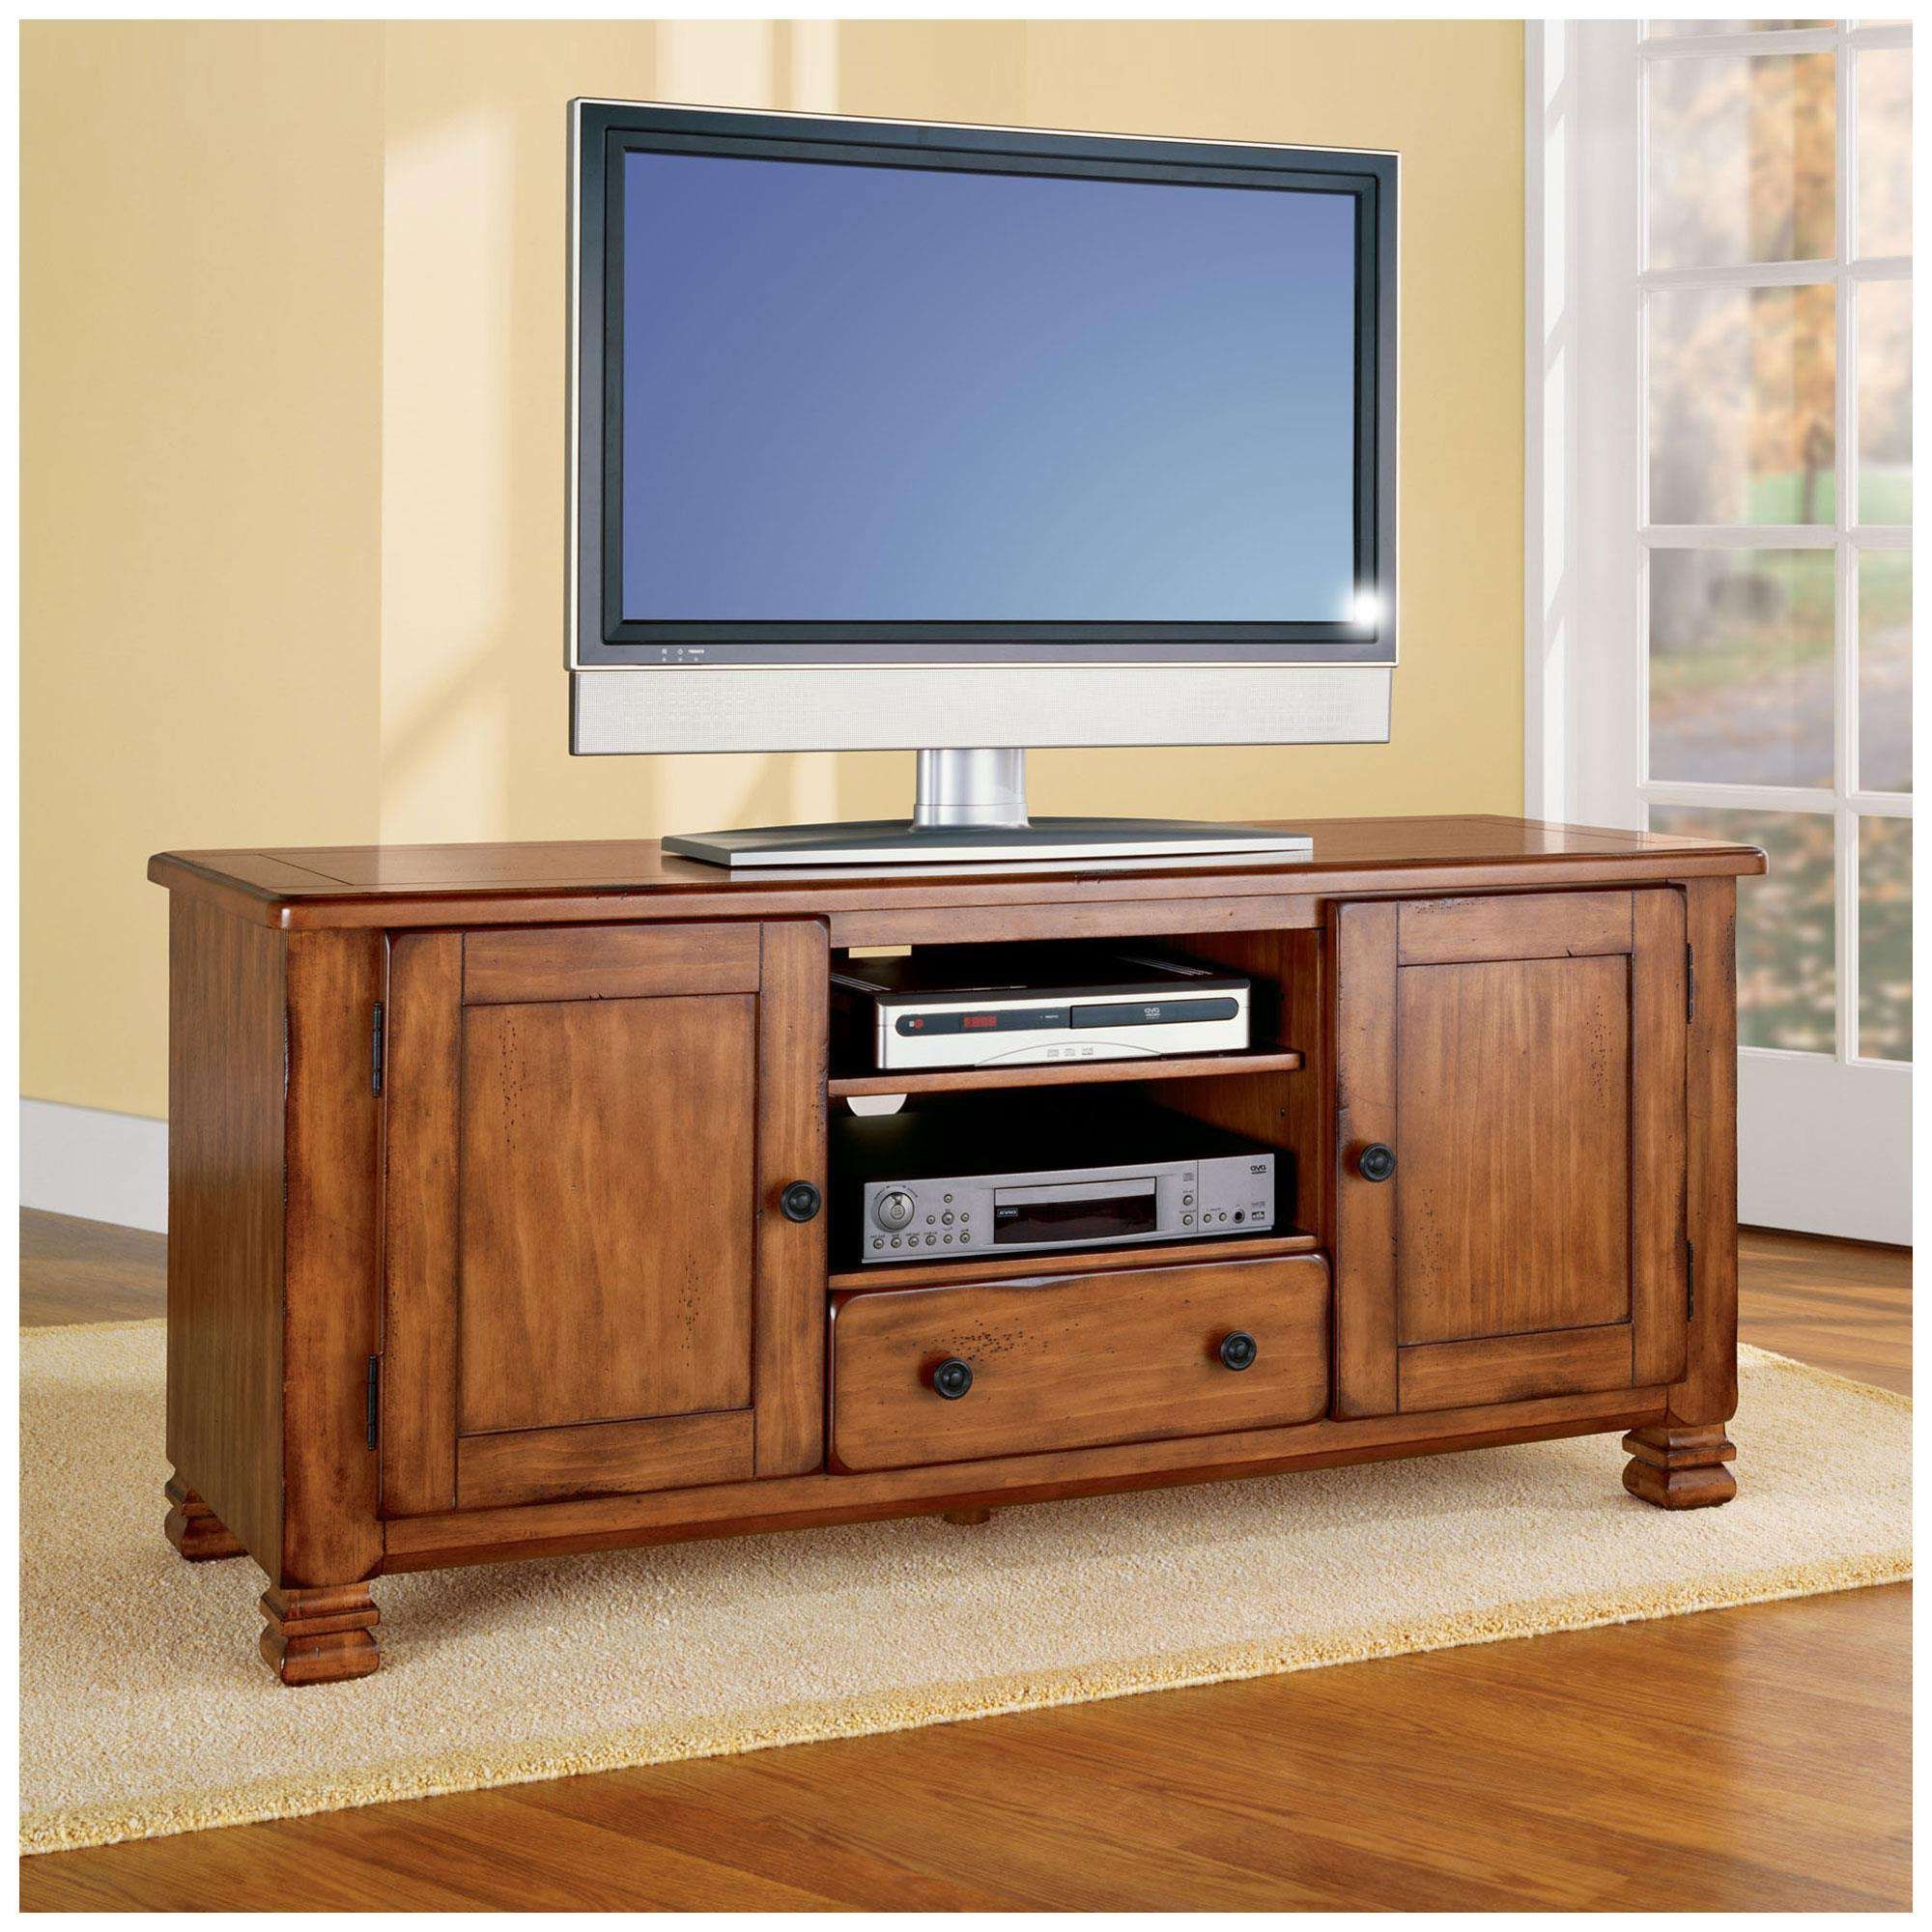 Oak Tv Stands For Flat Screen Within Oak Tv Stands For Flat Screen (View 2 of 15)